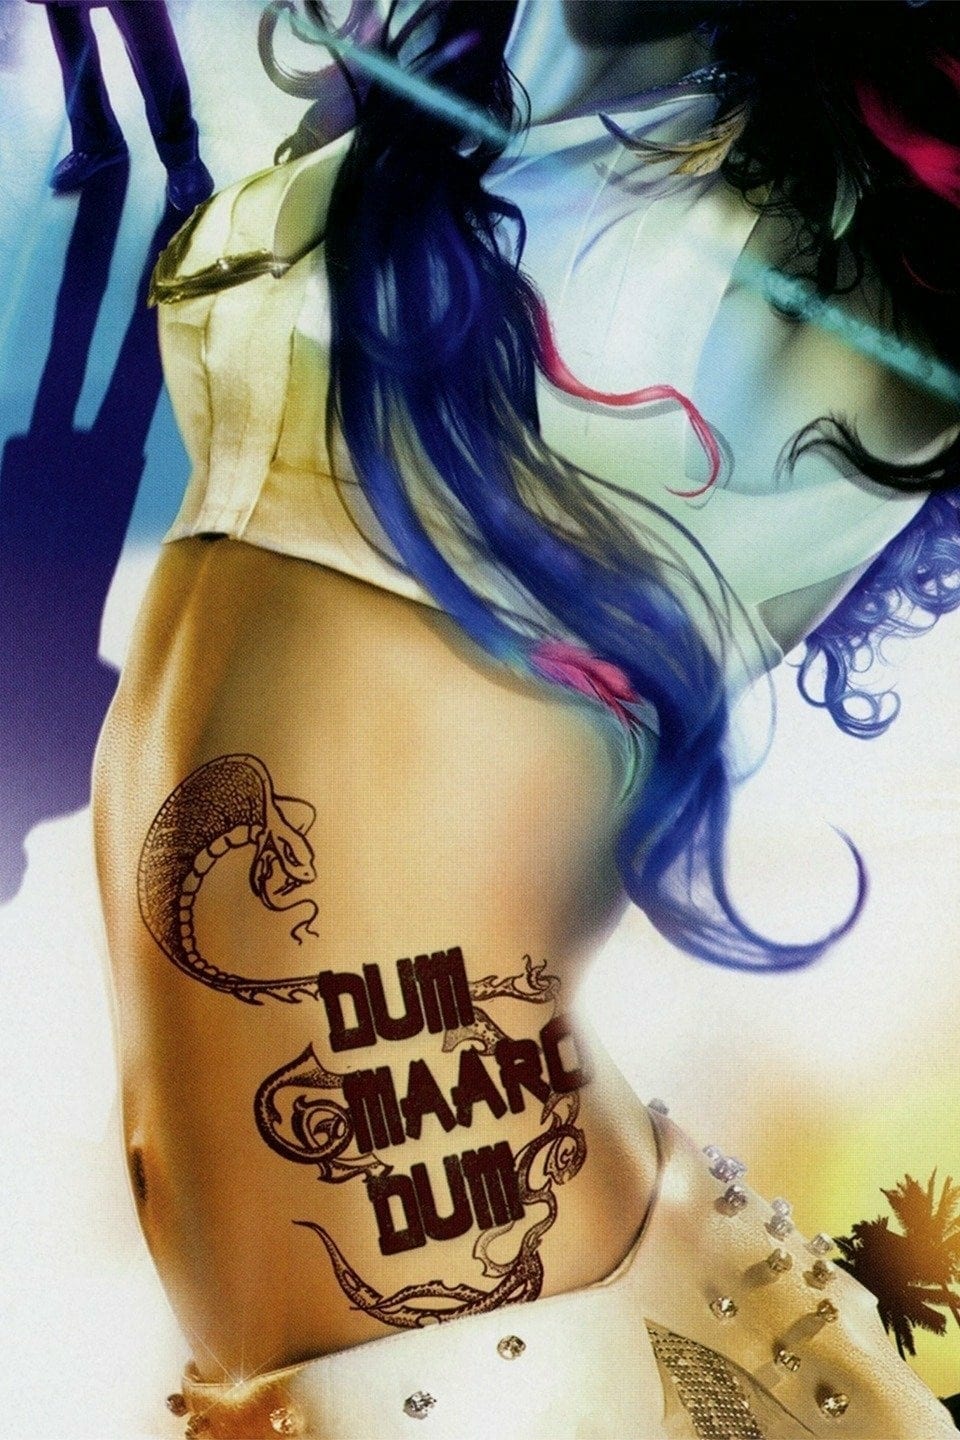 Poster for the movie "Dum Maaro Dum"